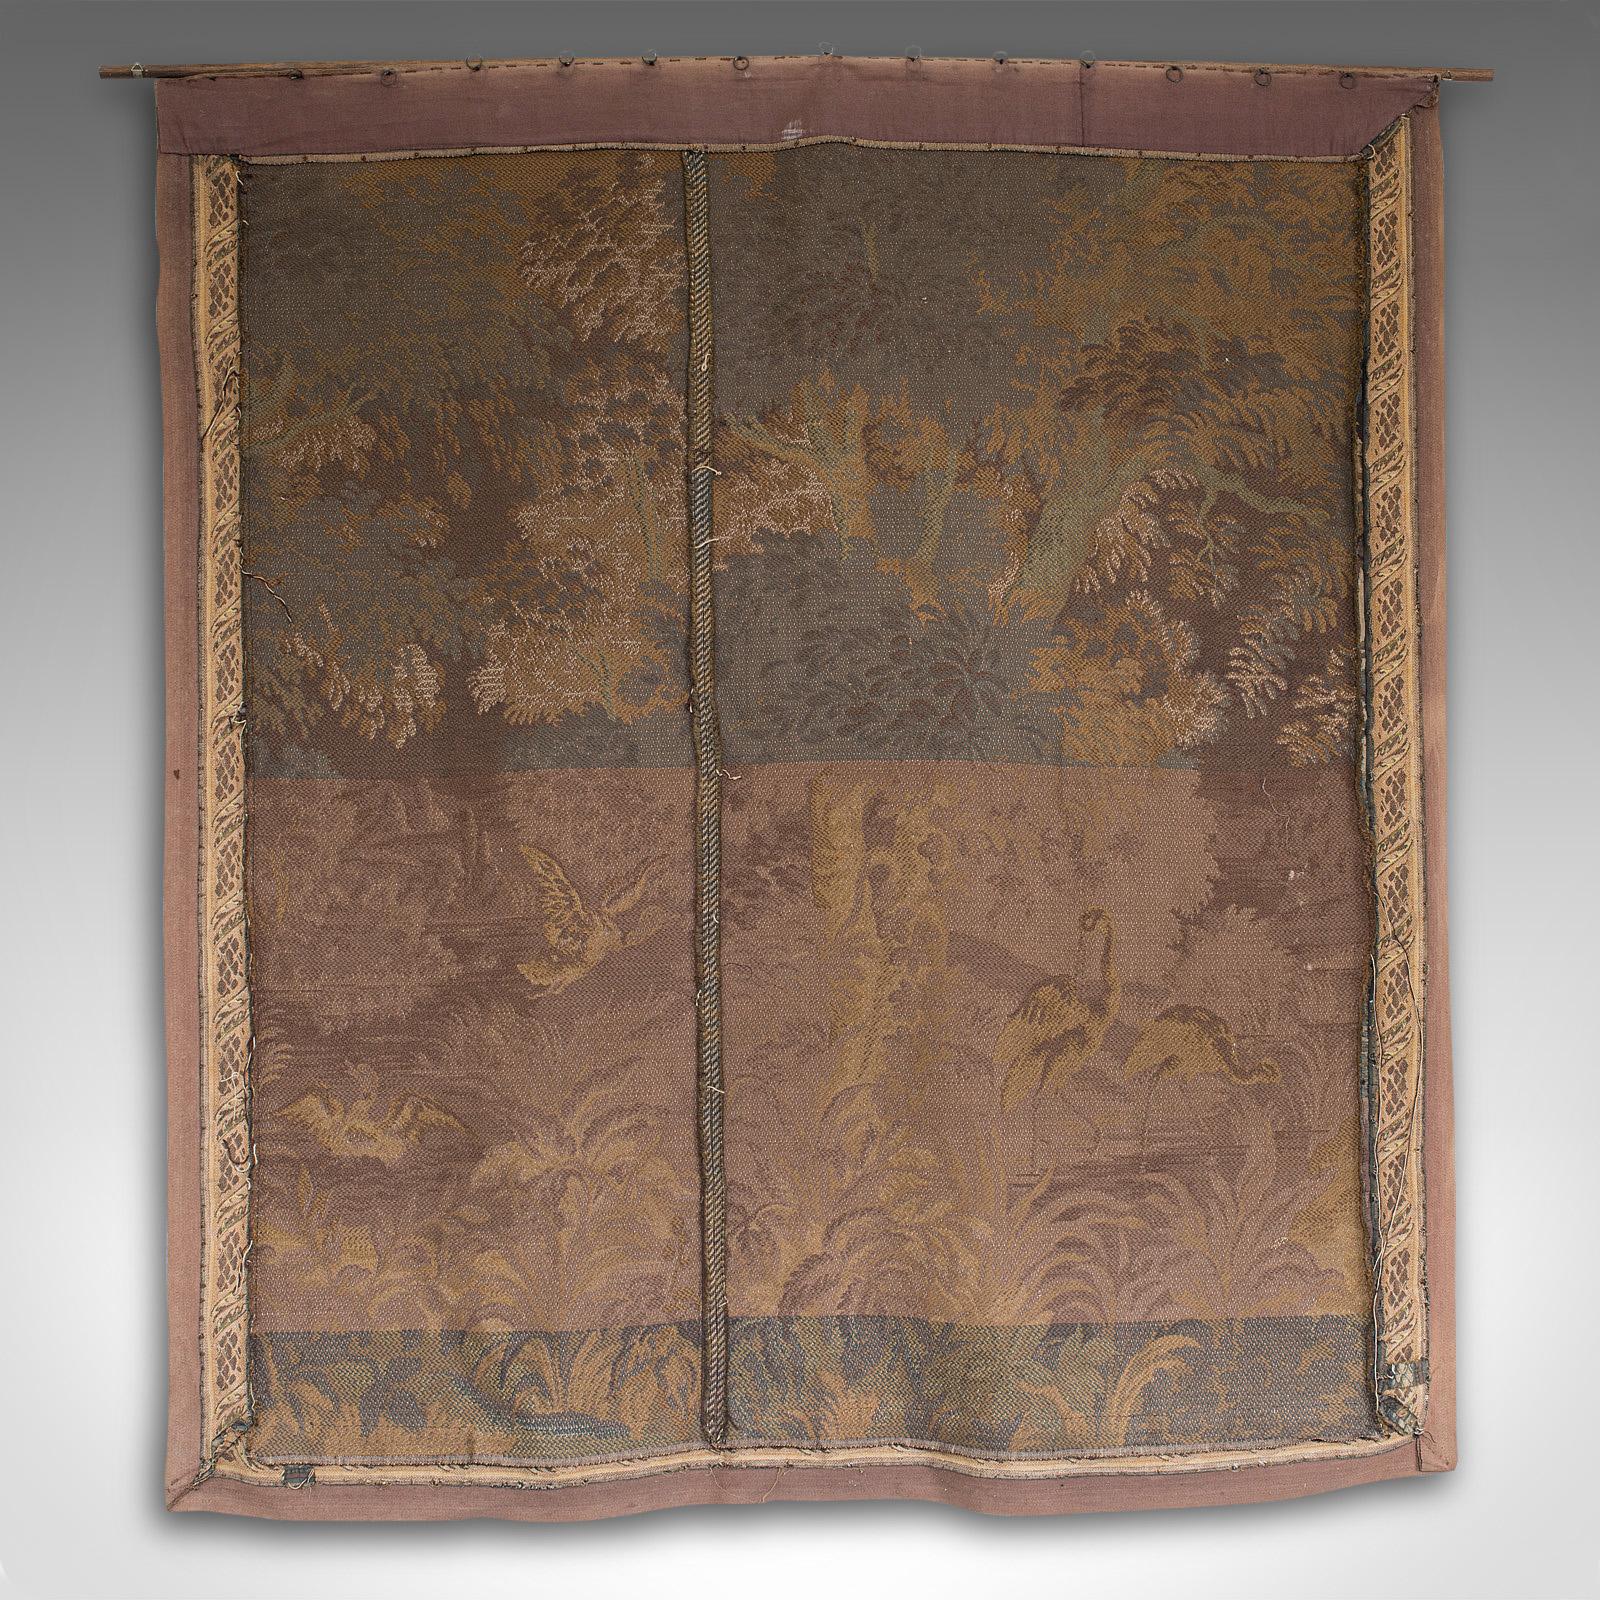 vAntique Verdure Tapestry, Continental, Textile, Wall, Decorative, Victorian 2